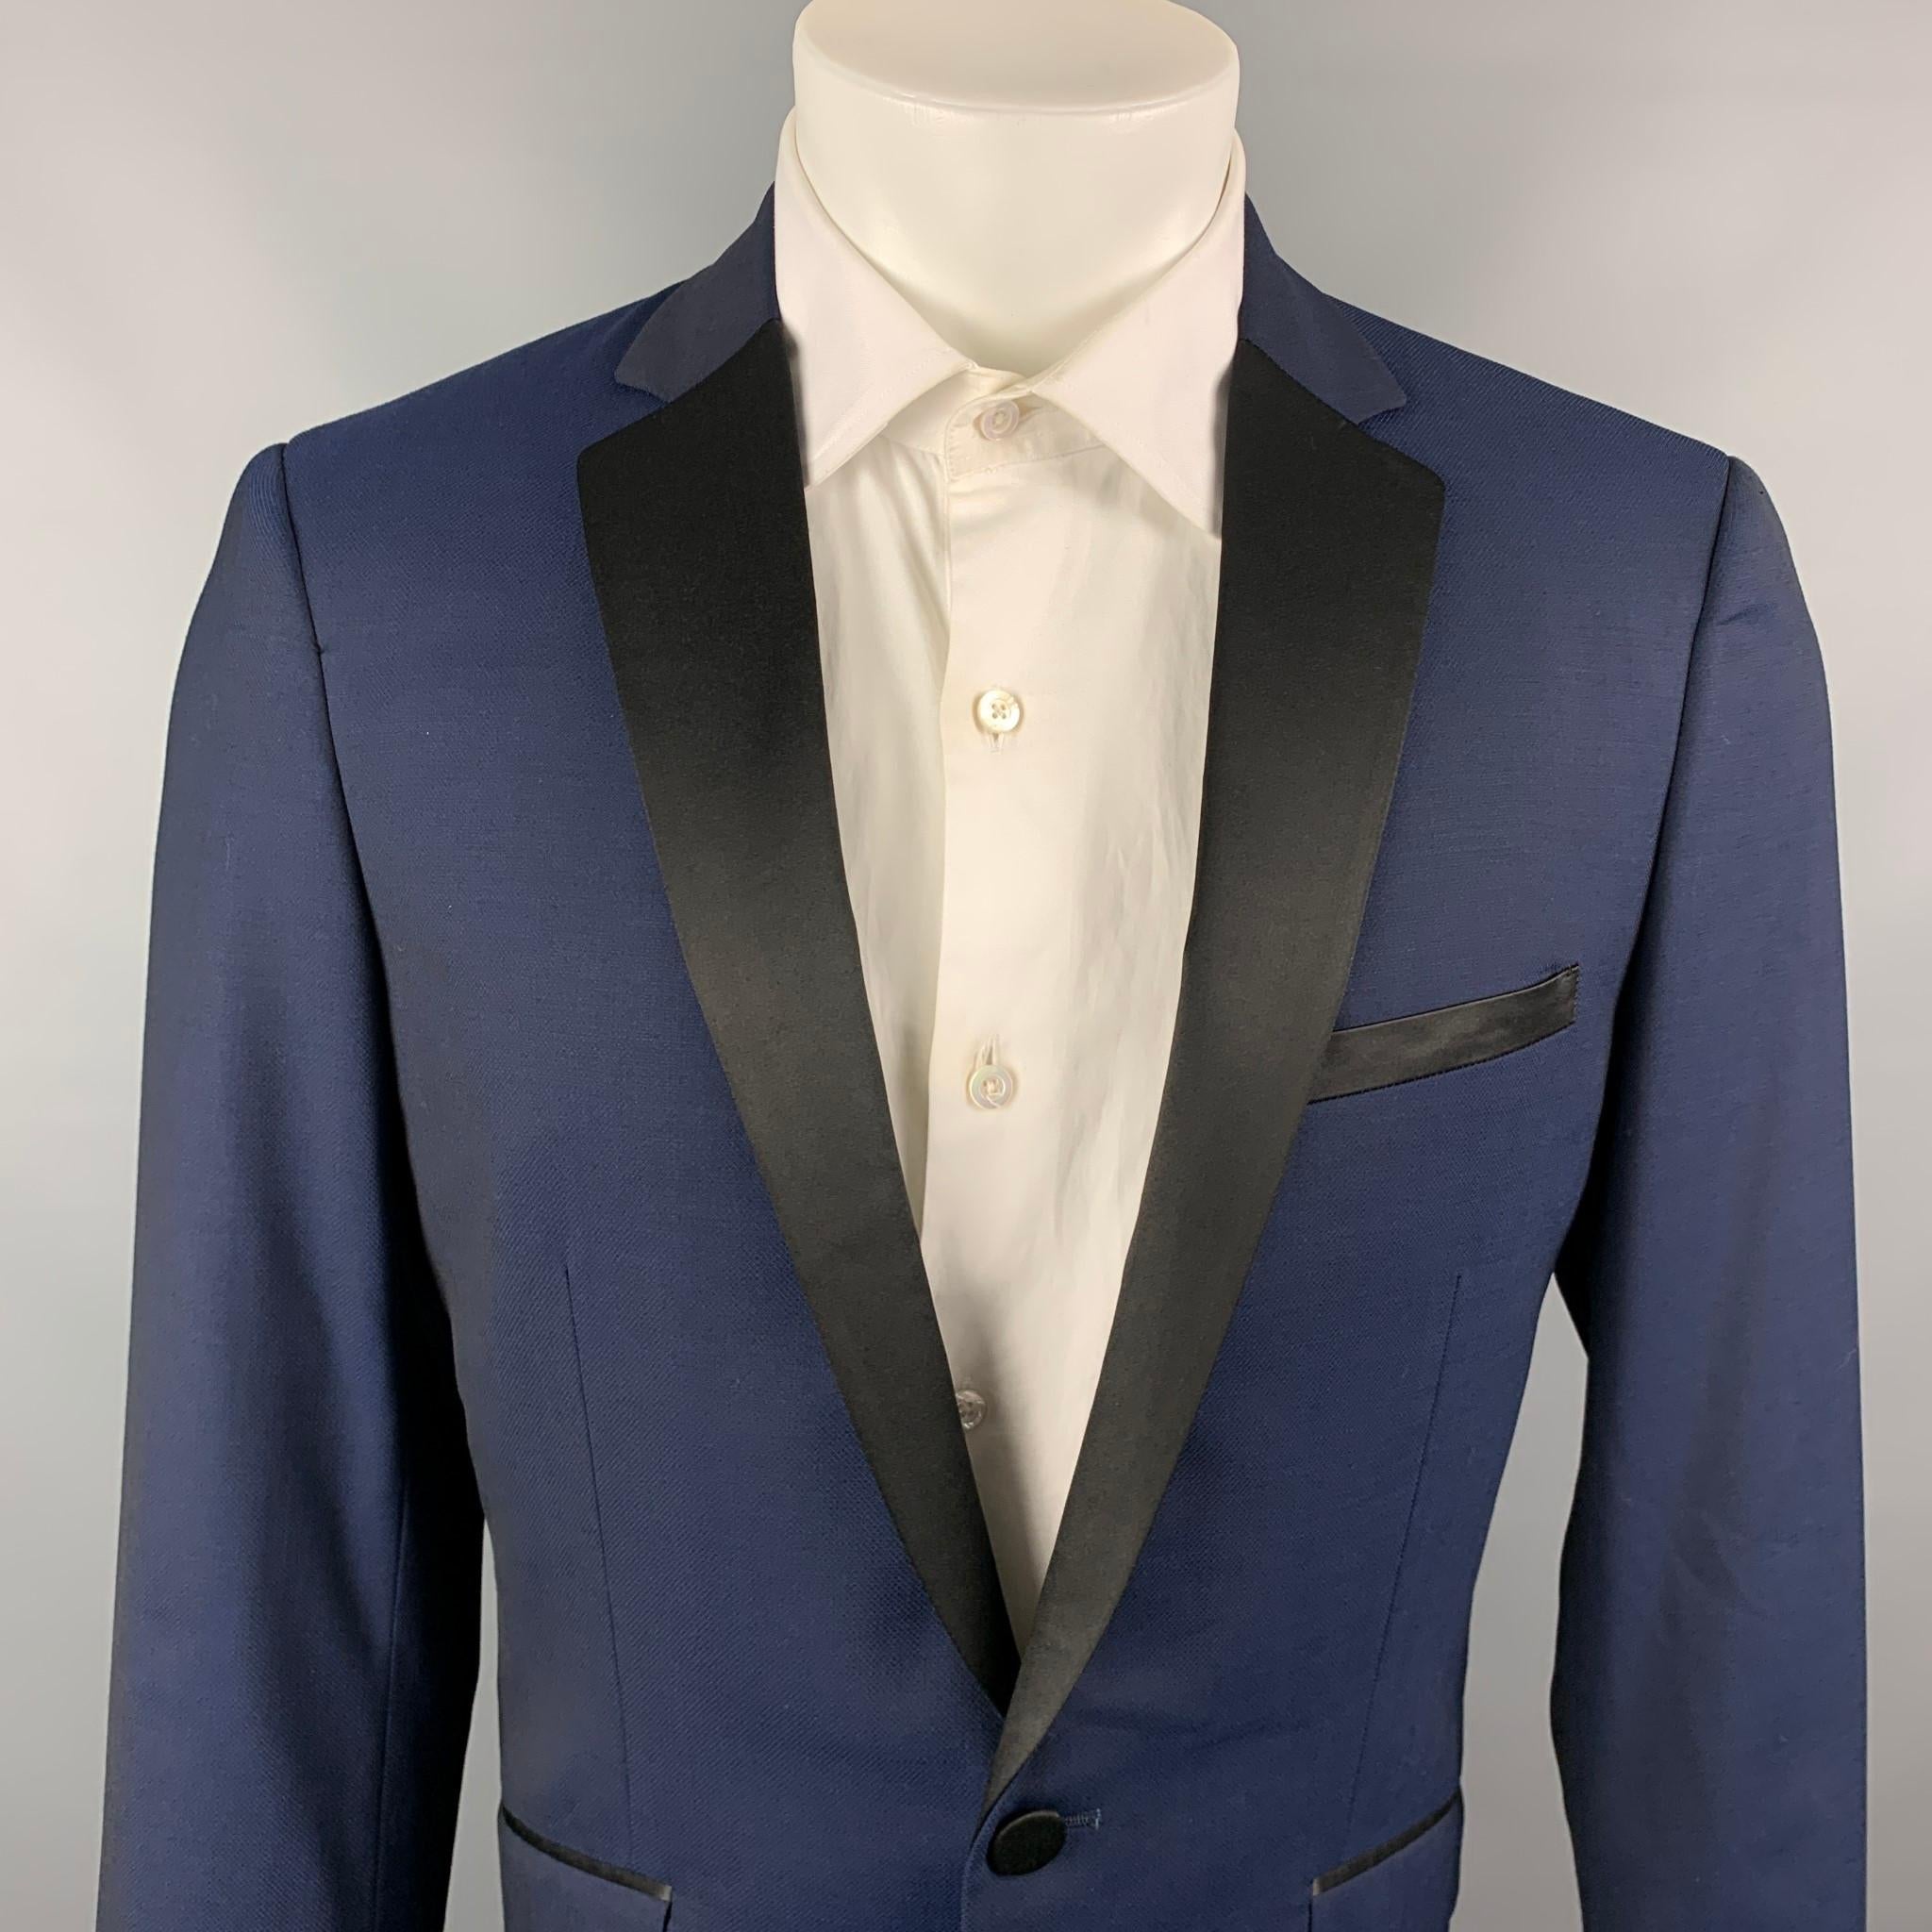 blue blazer with black lapel